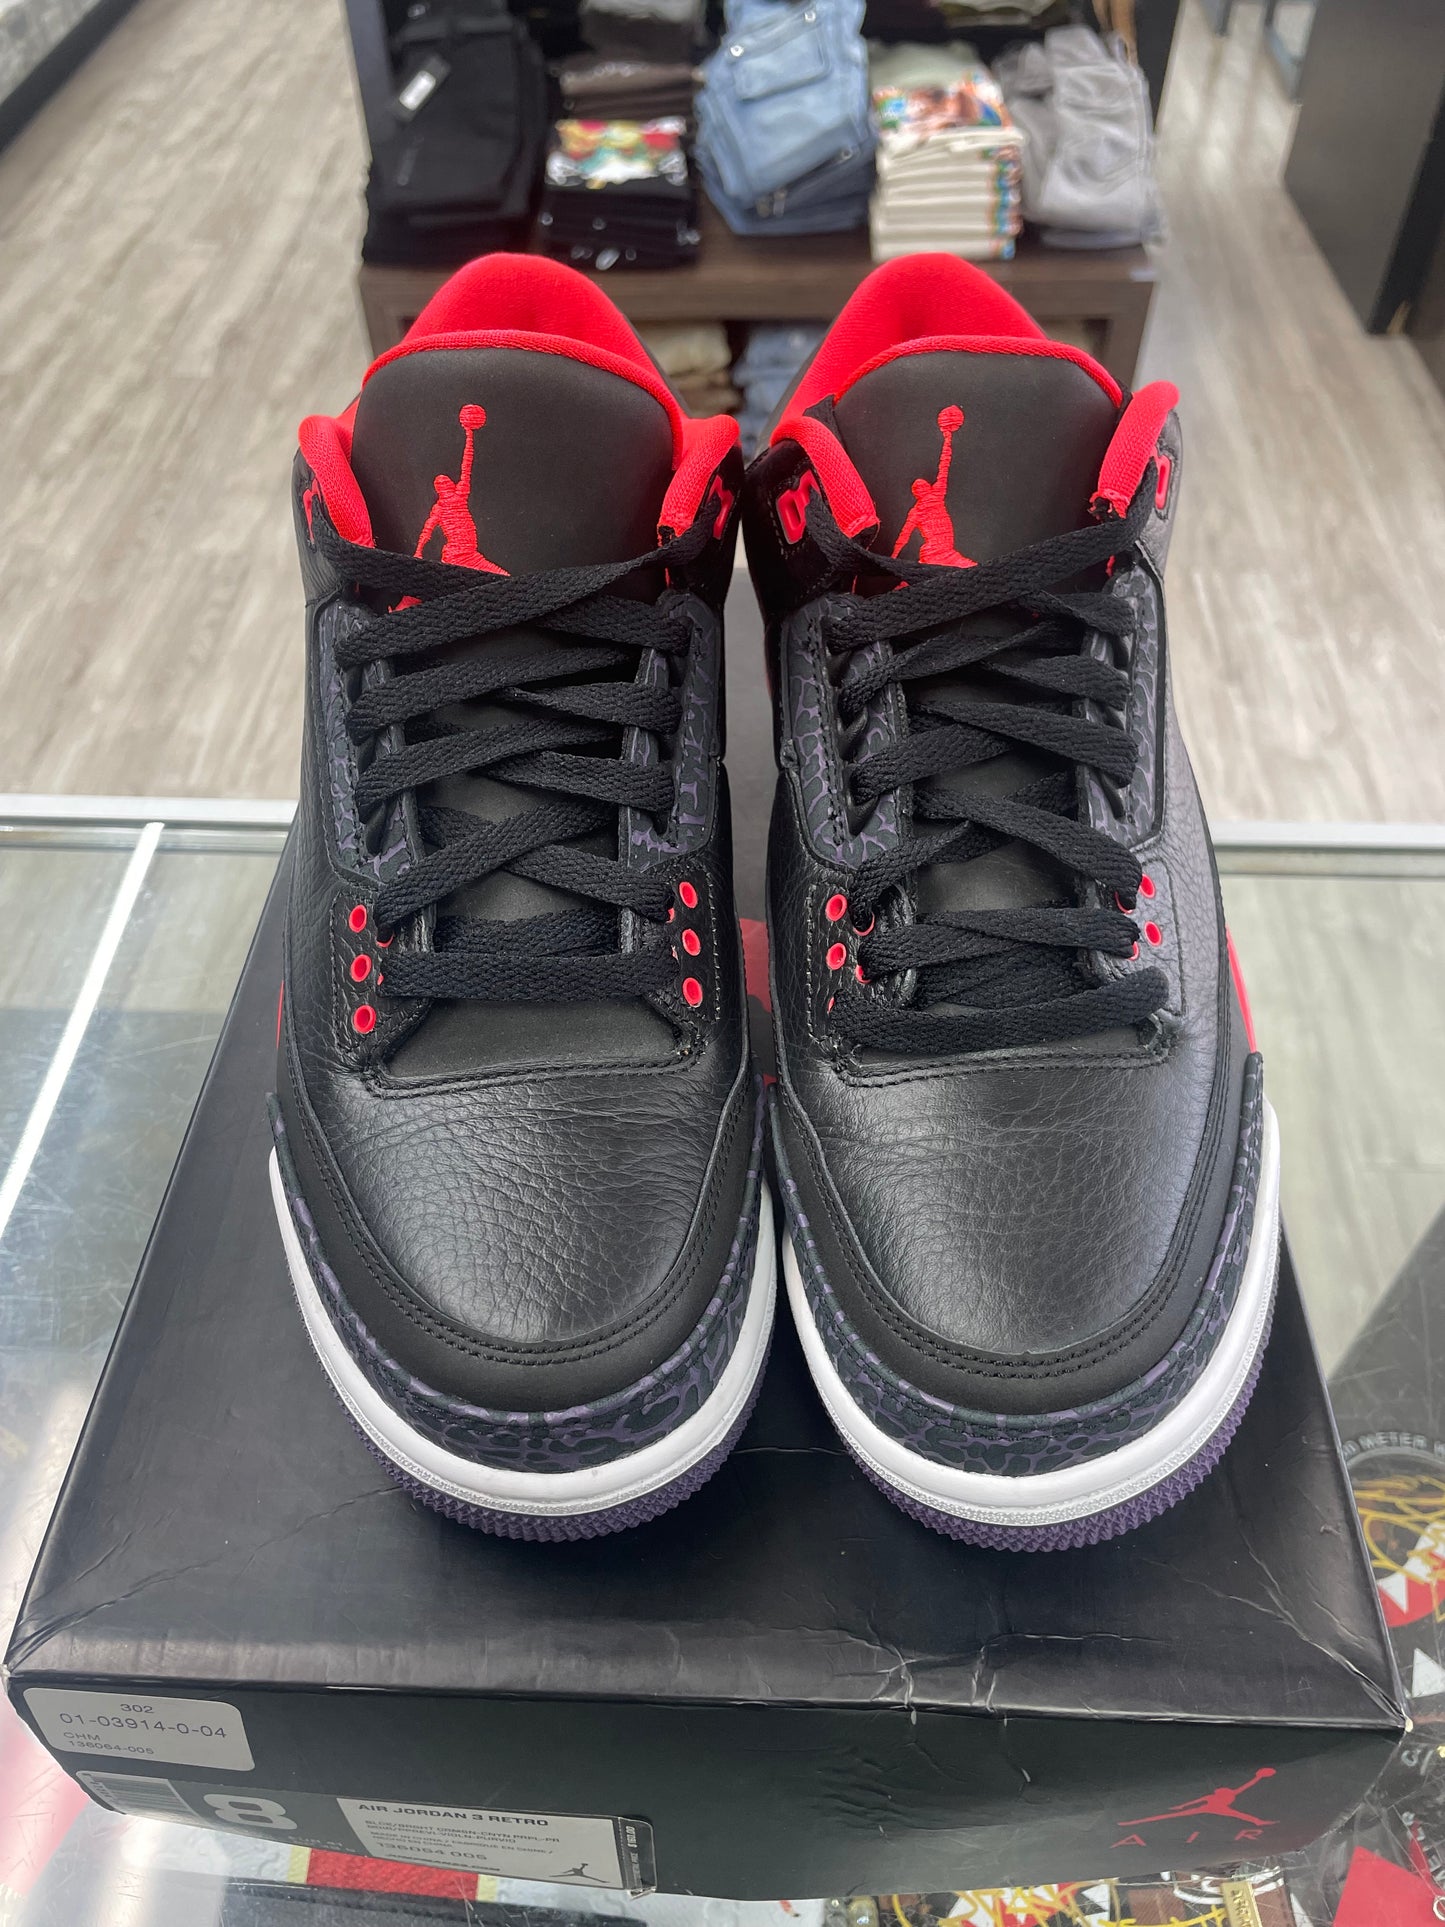 Air Jordan Retro 3 "Crimson" *Size 8 Preowned*